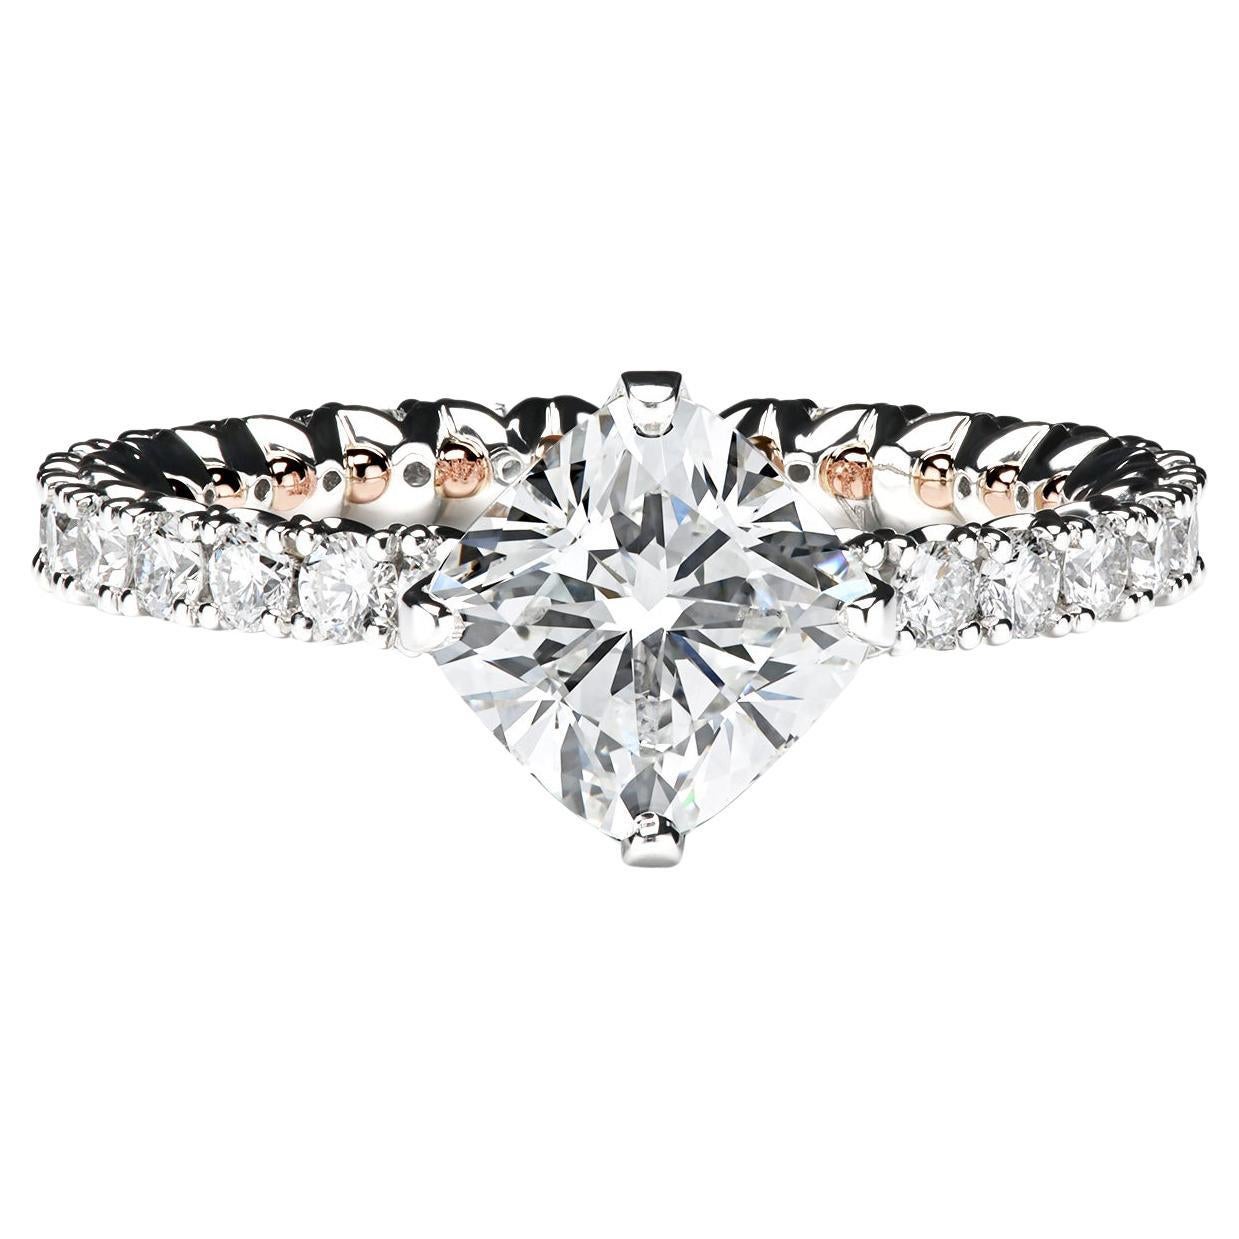 Leon Mege Custom Made Diamond Engagement Ring 